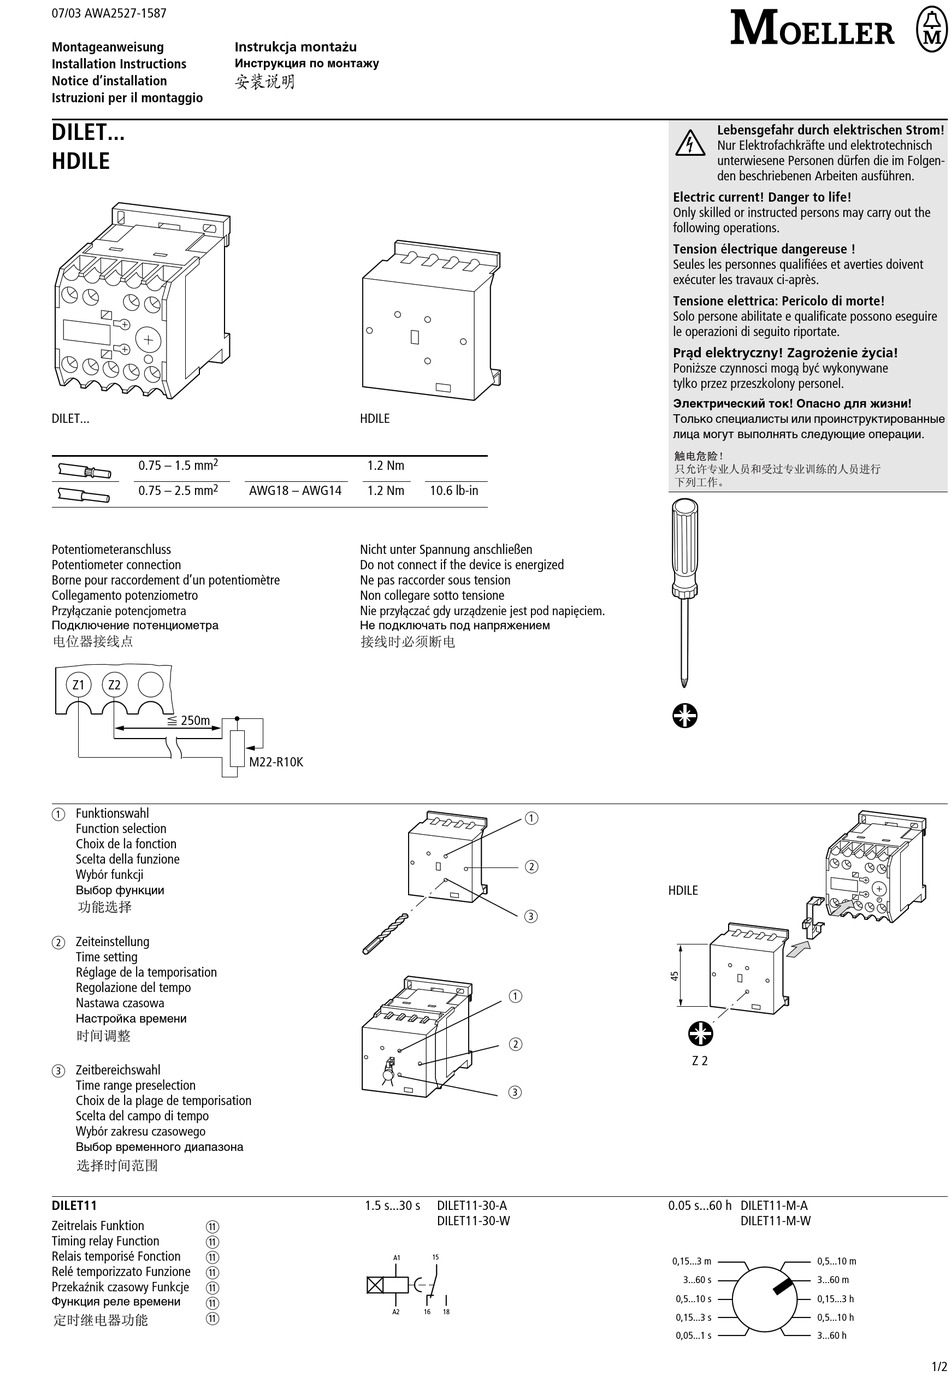 moeller-dilet-series-installation-instructions-pdf-download-manualslib